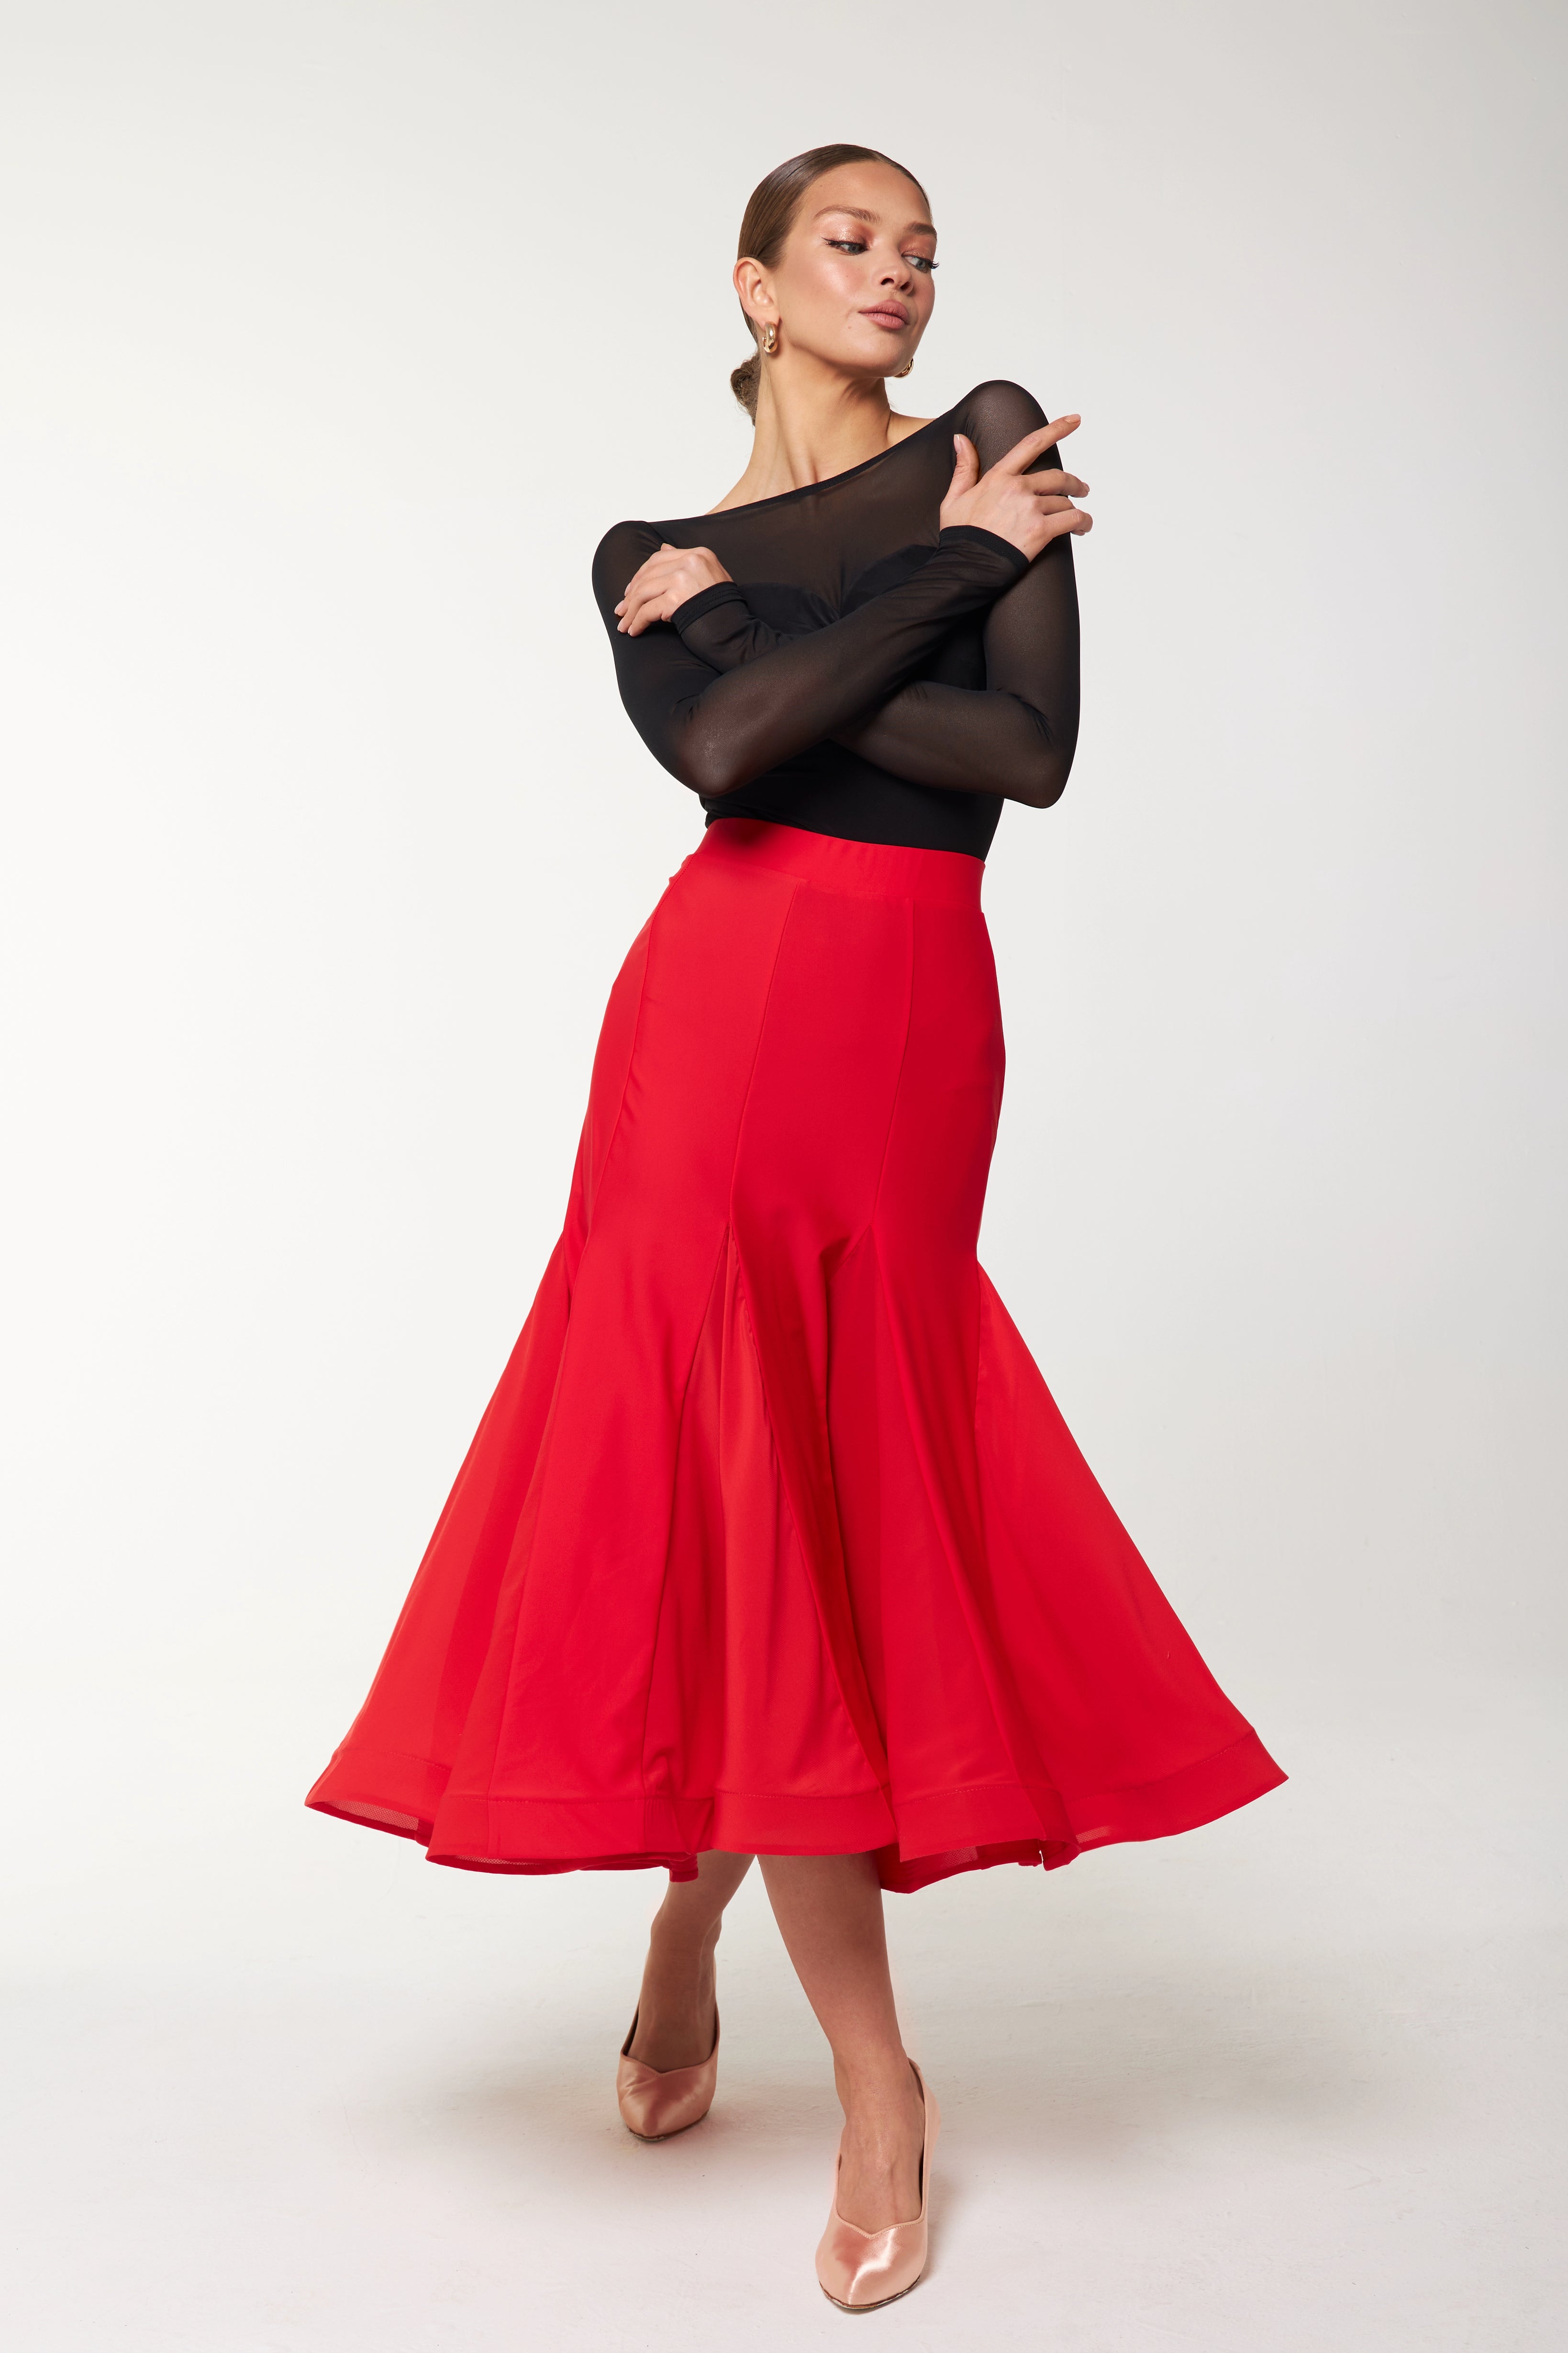 Gipsy Flamenco Dance Skirt - Everything Flamenco